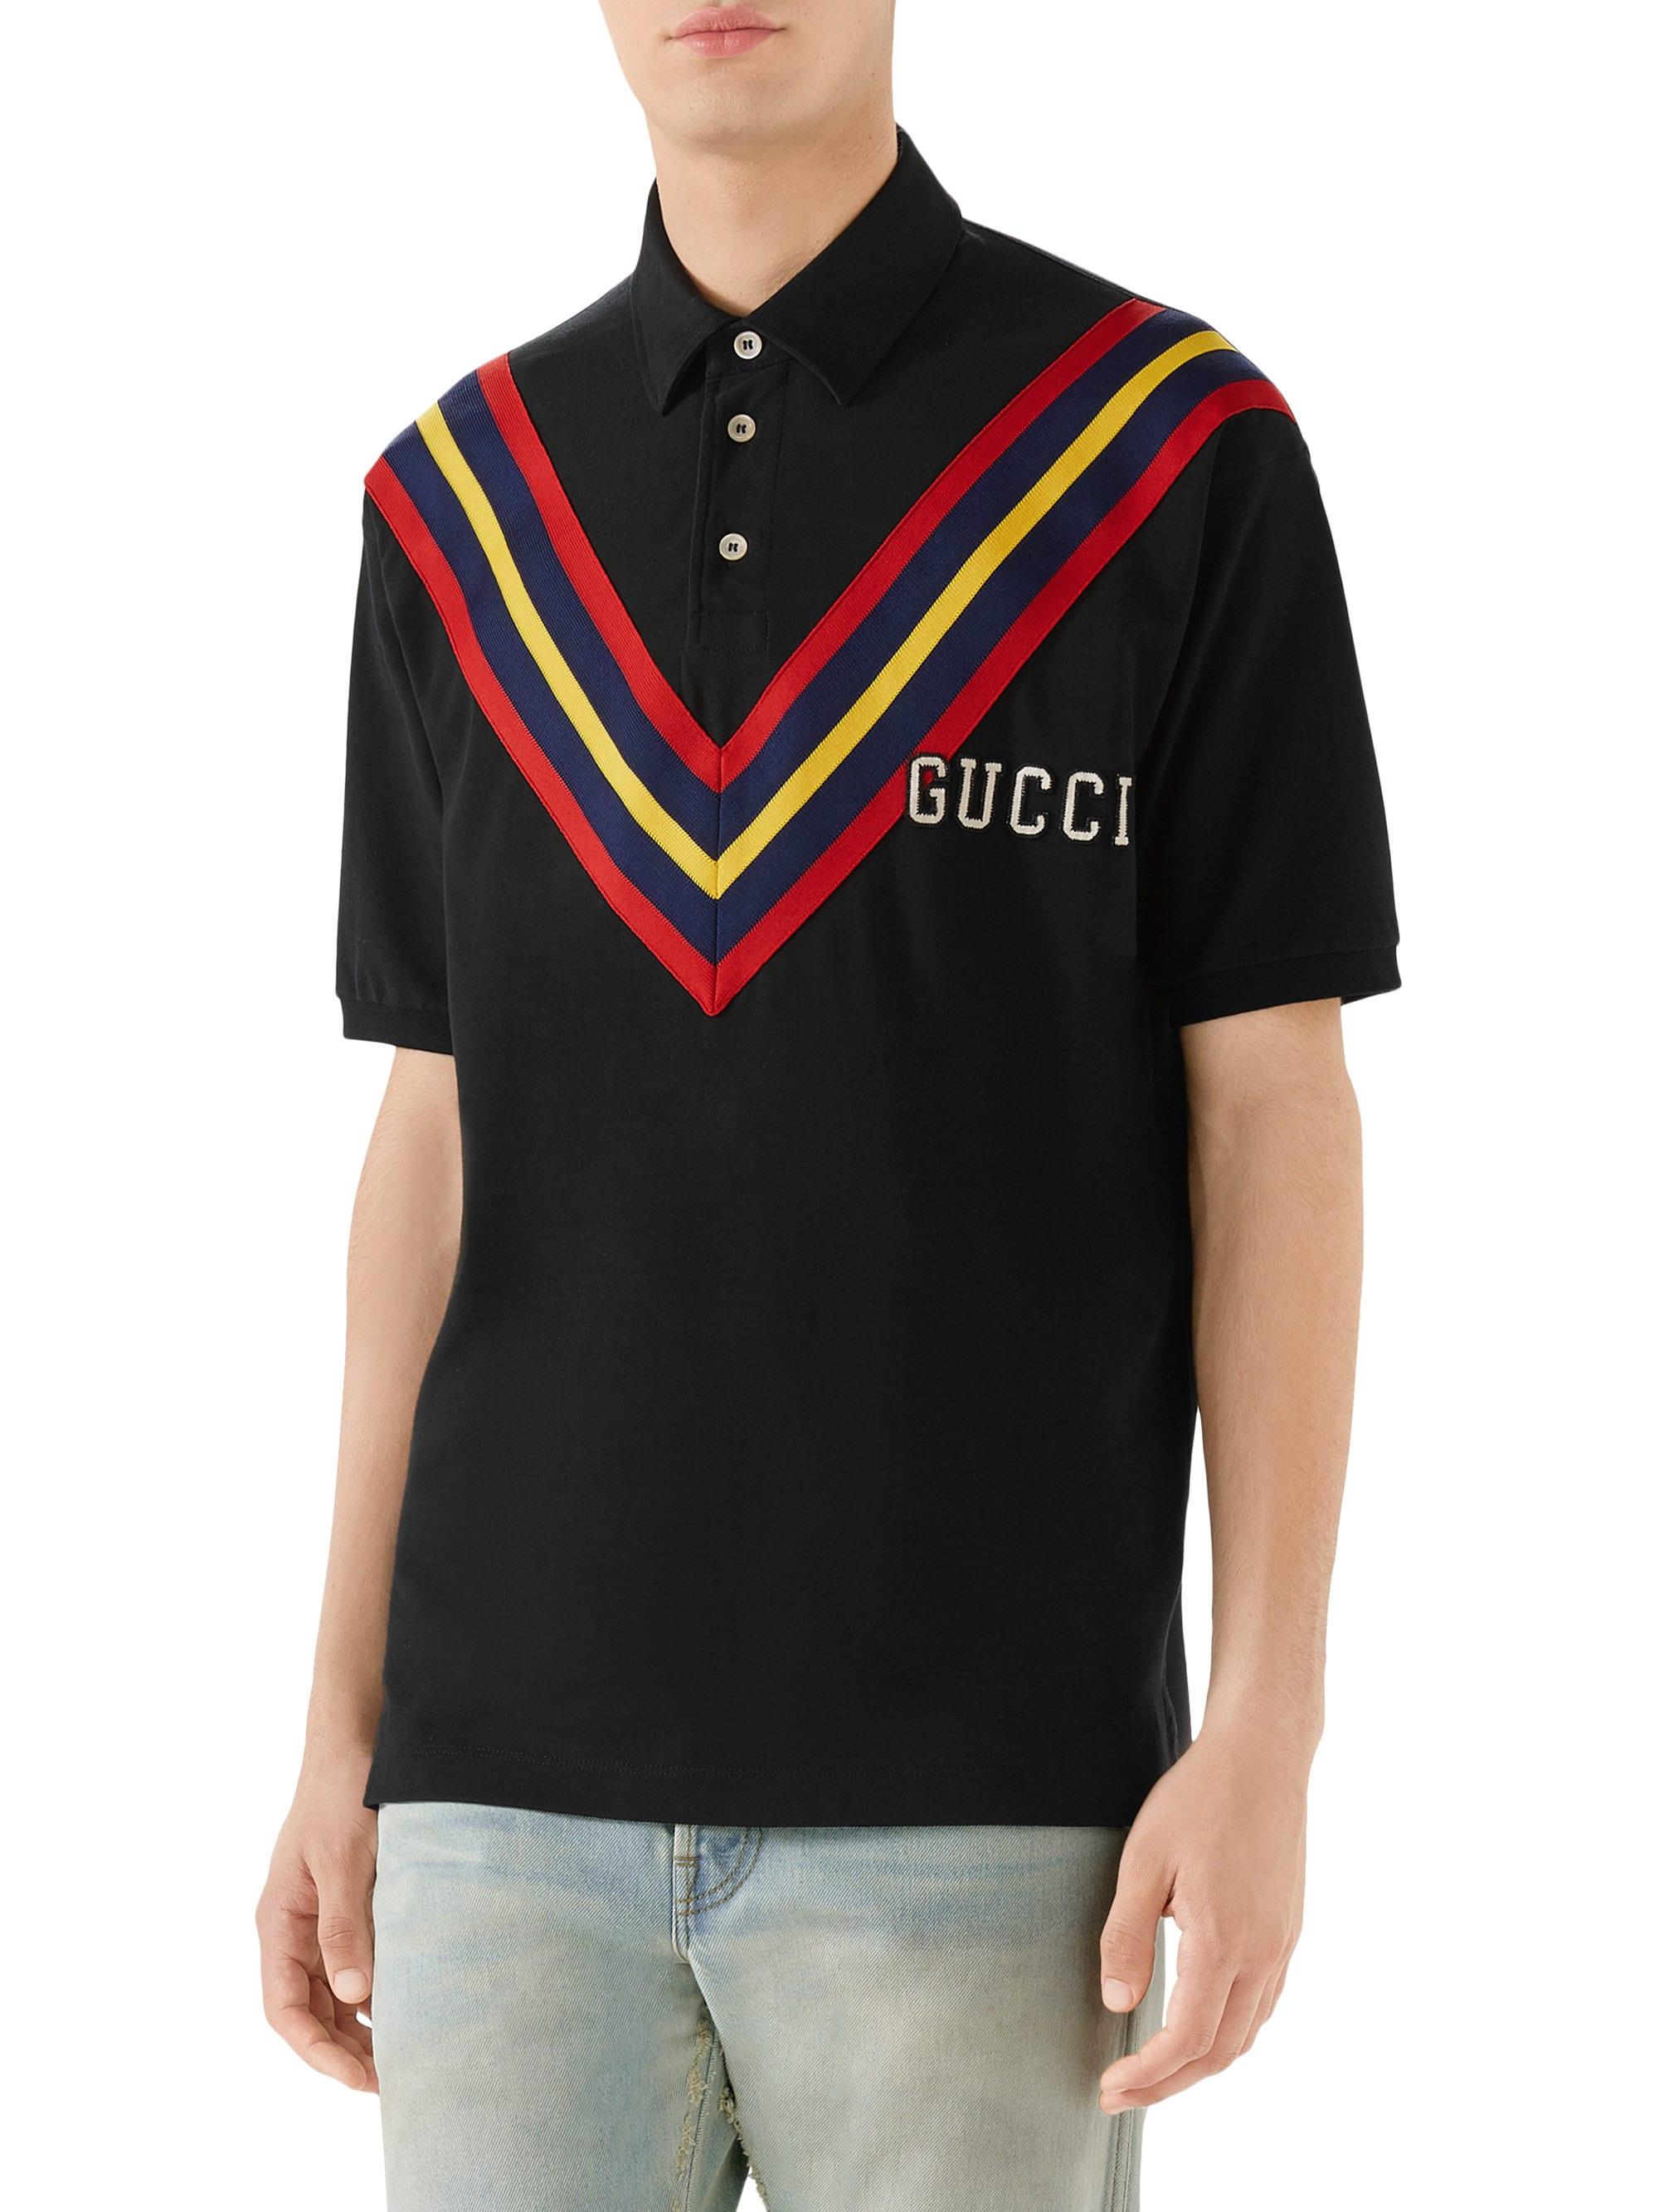 Gucci Graphic Print Cotton Polo Shirt 